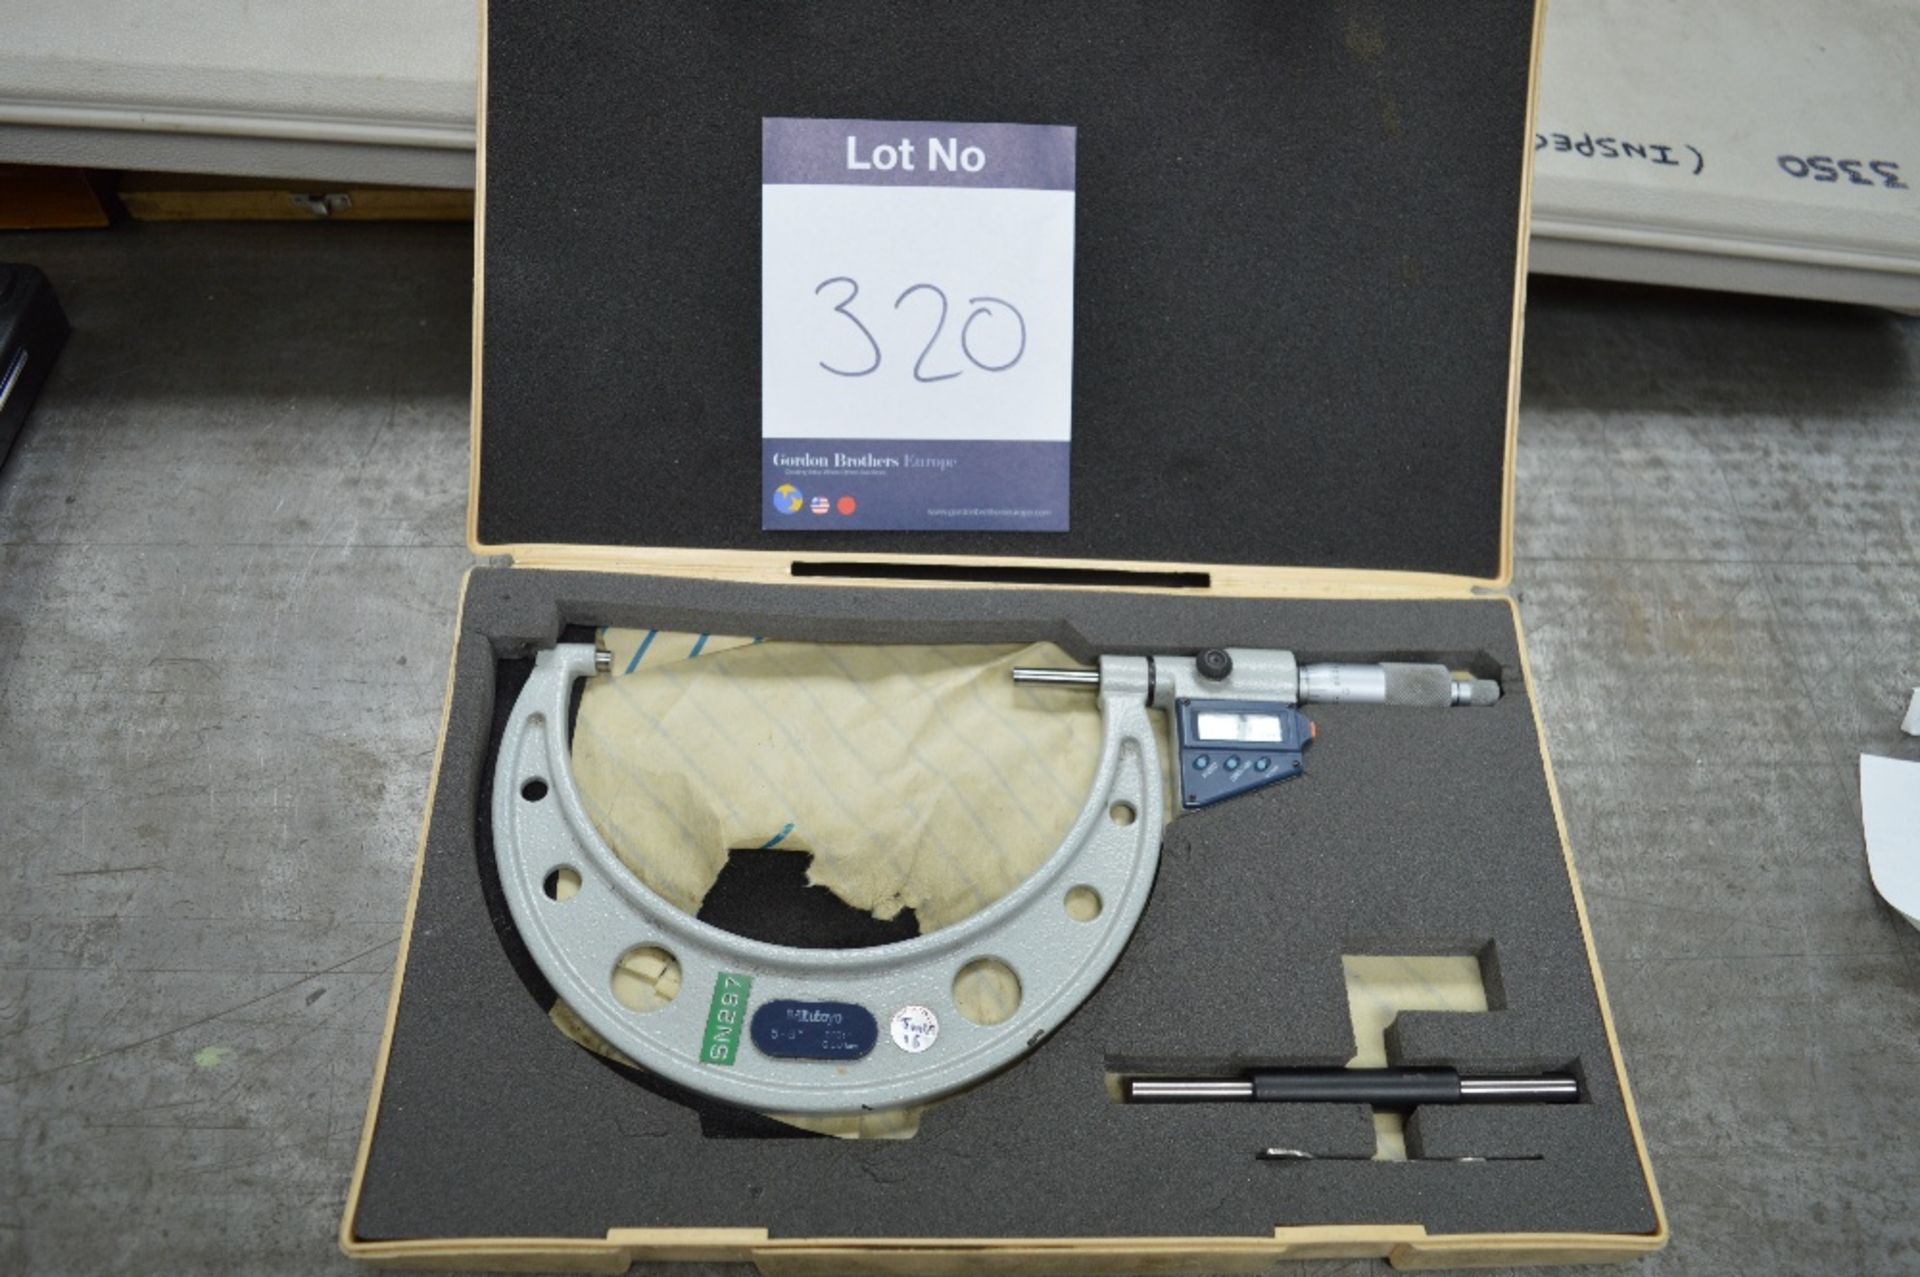 Mitutoyo 3-4" Digital Micrometer
Serial Number: 29